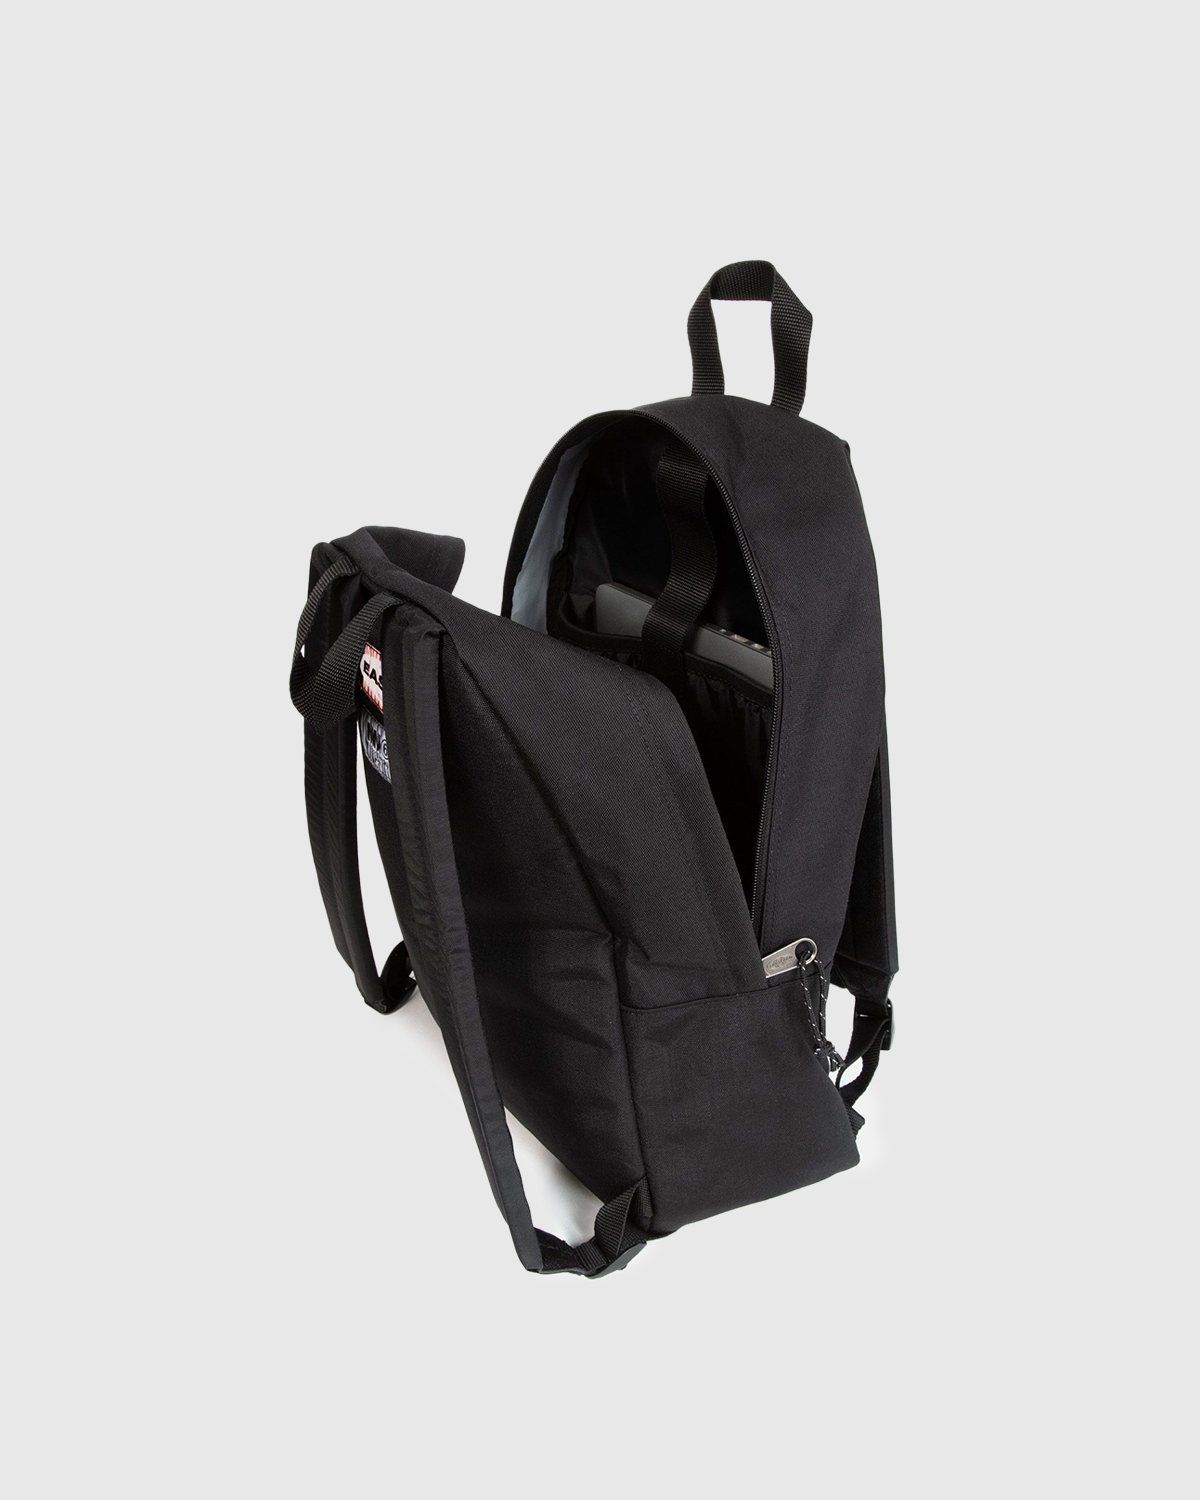 MM6 Maison Margiela x Eastpak – Padded XL Backpack Black - Backpacks - Black - Image 3